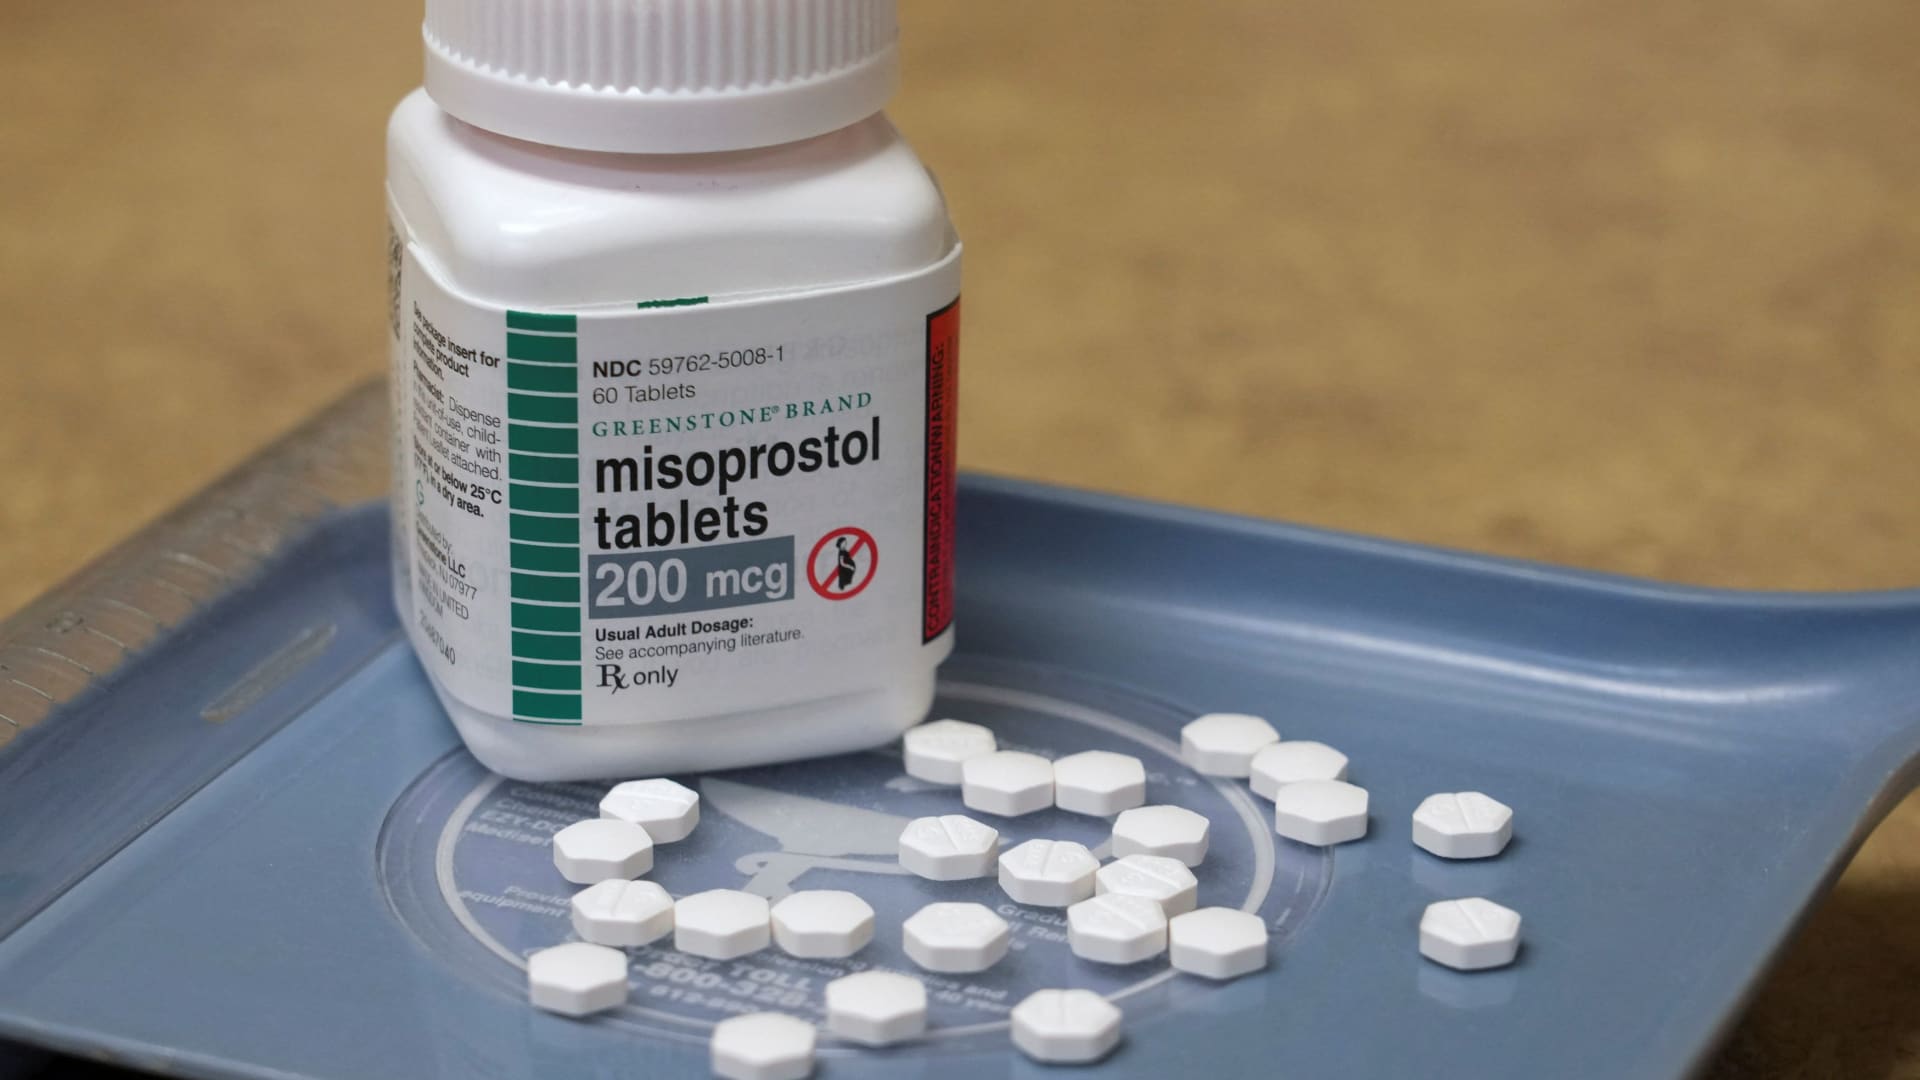 New York and California are stockpiling alternative abortion pill misoprostol